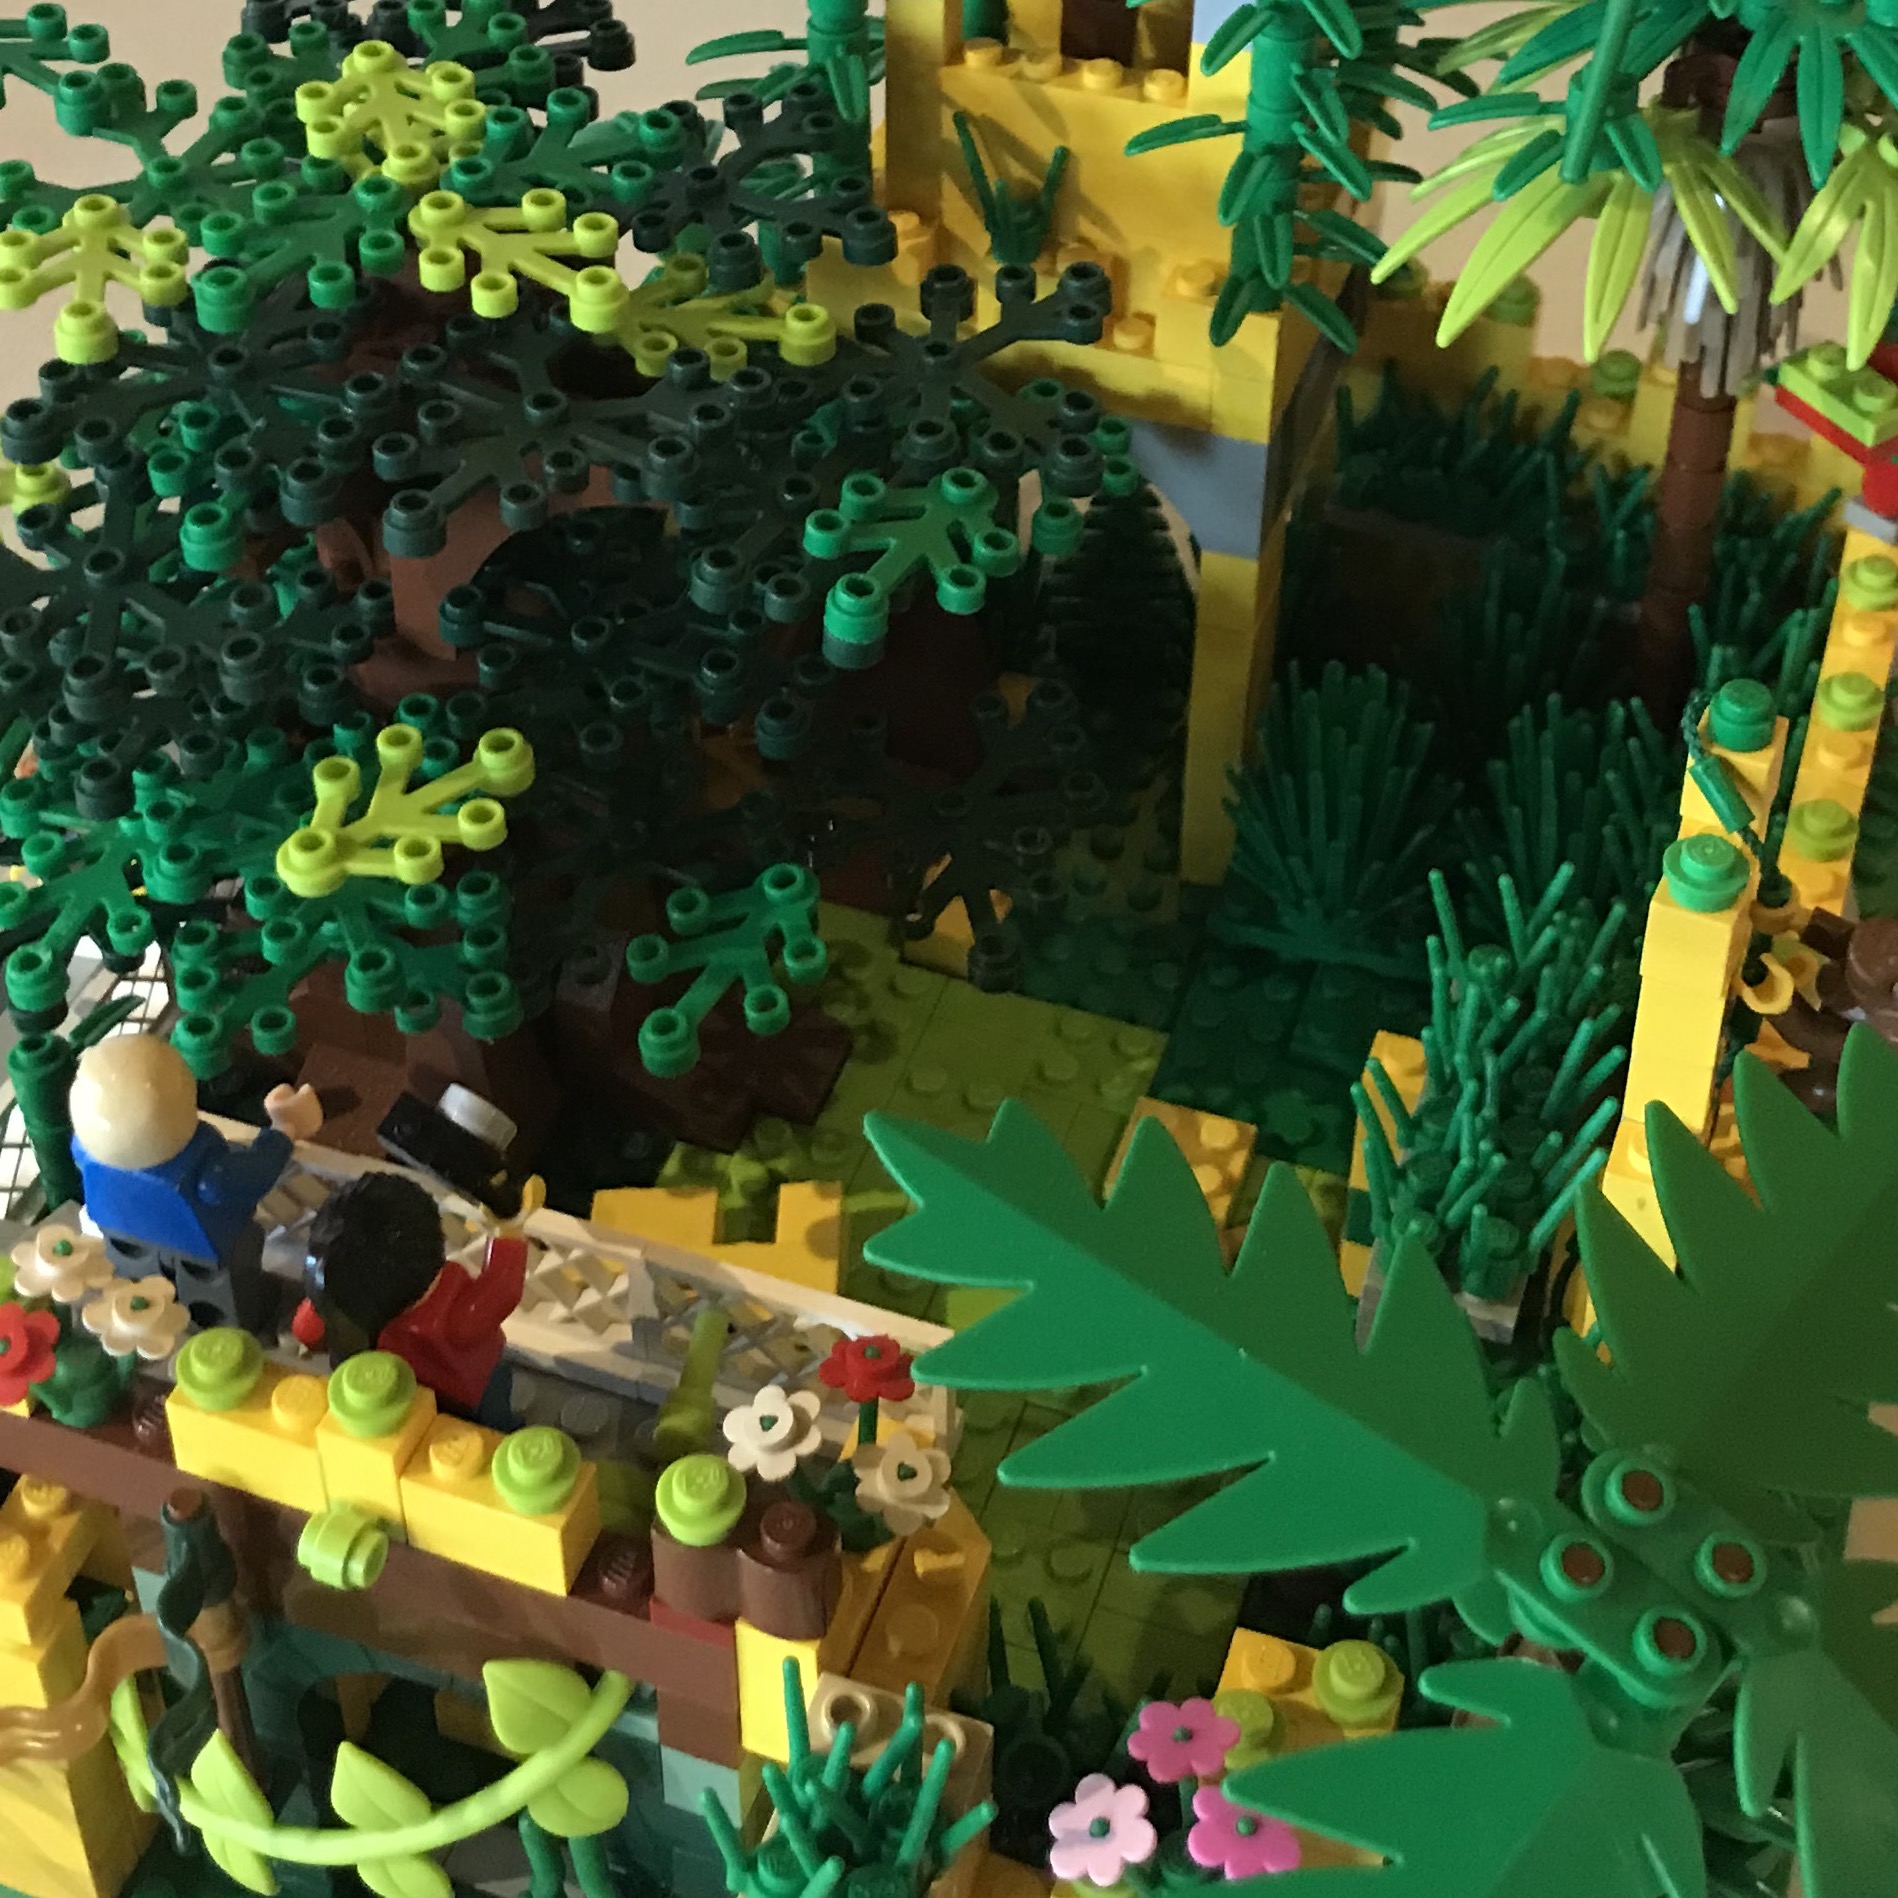 Lego original creation, jungle scene.